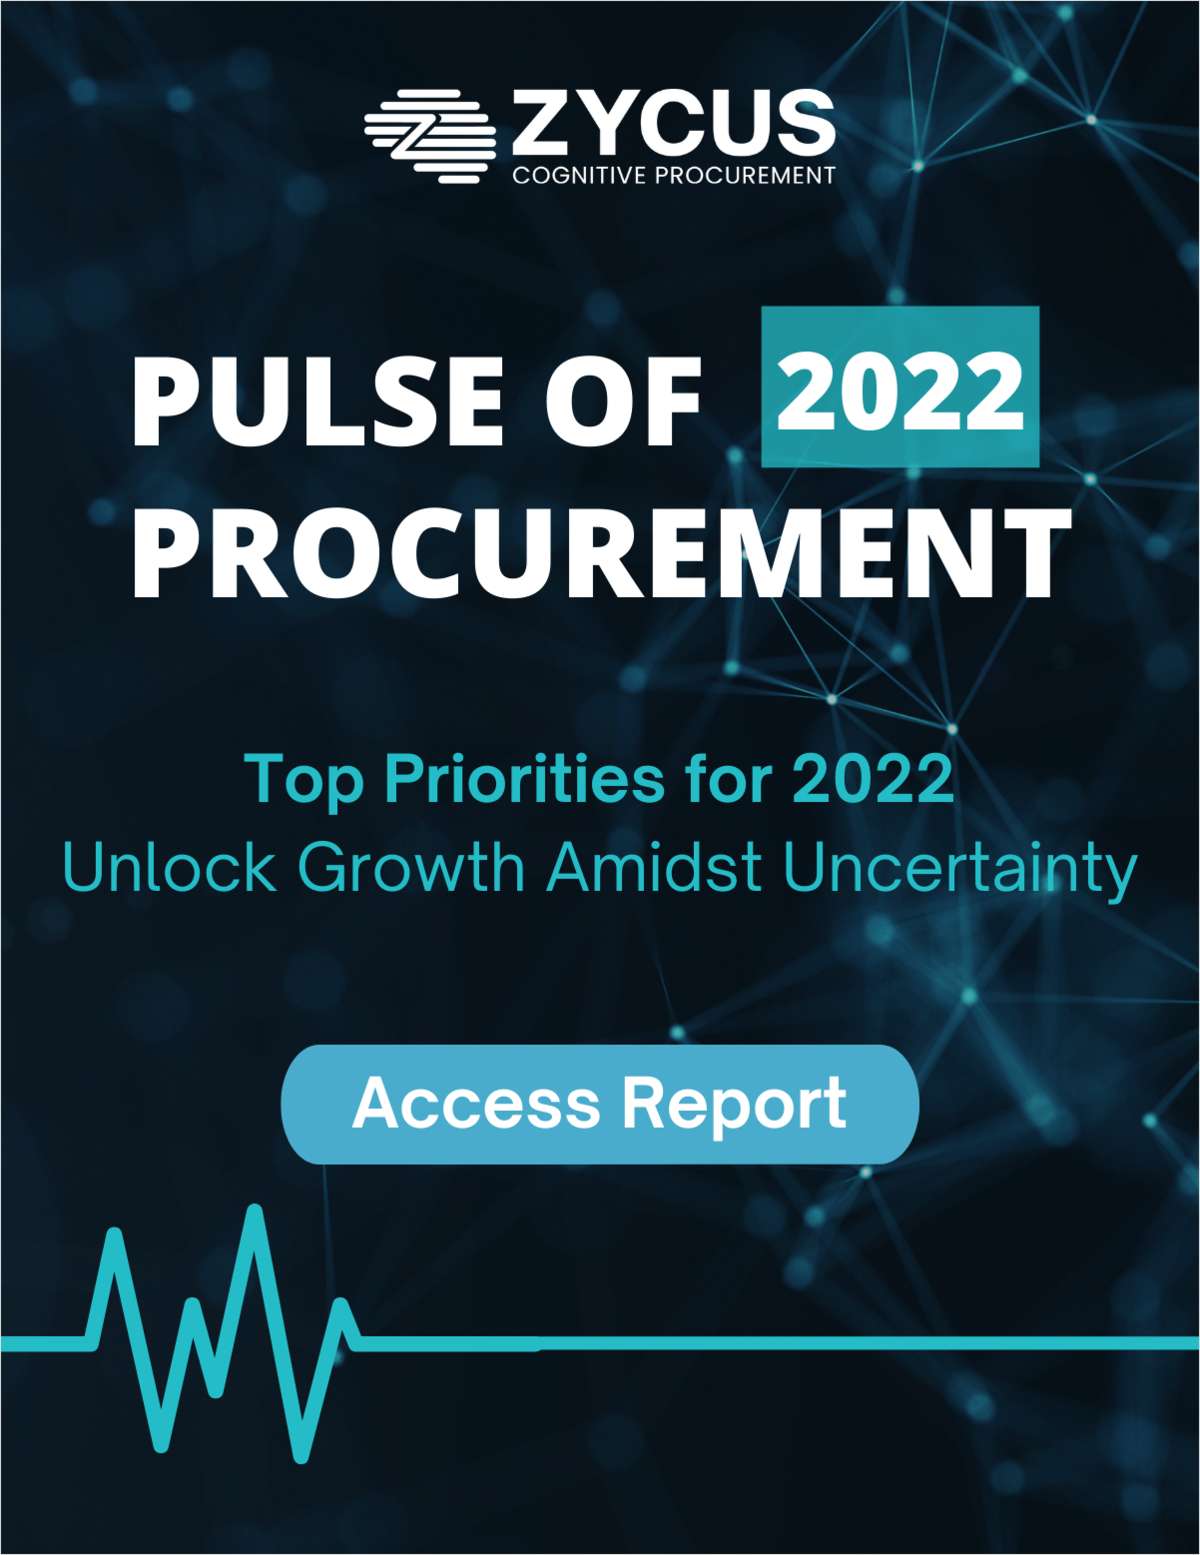 Zycus' Annual Pulse of Procurement 2022 Report